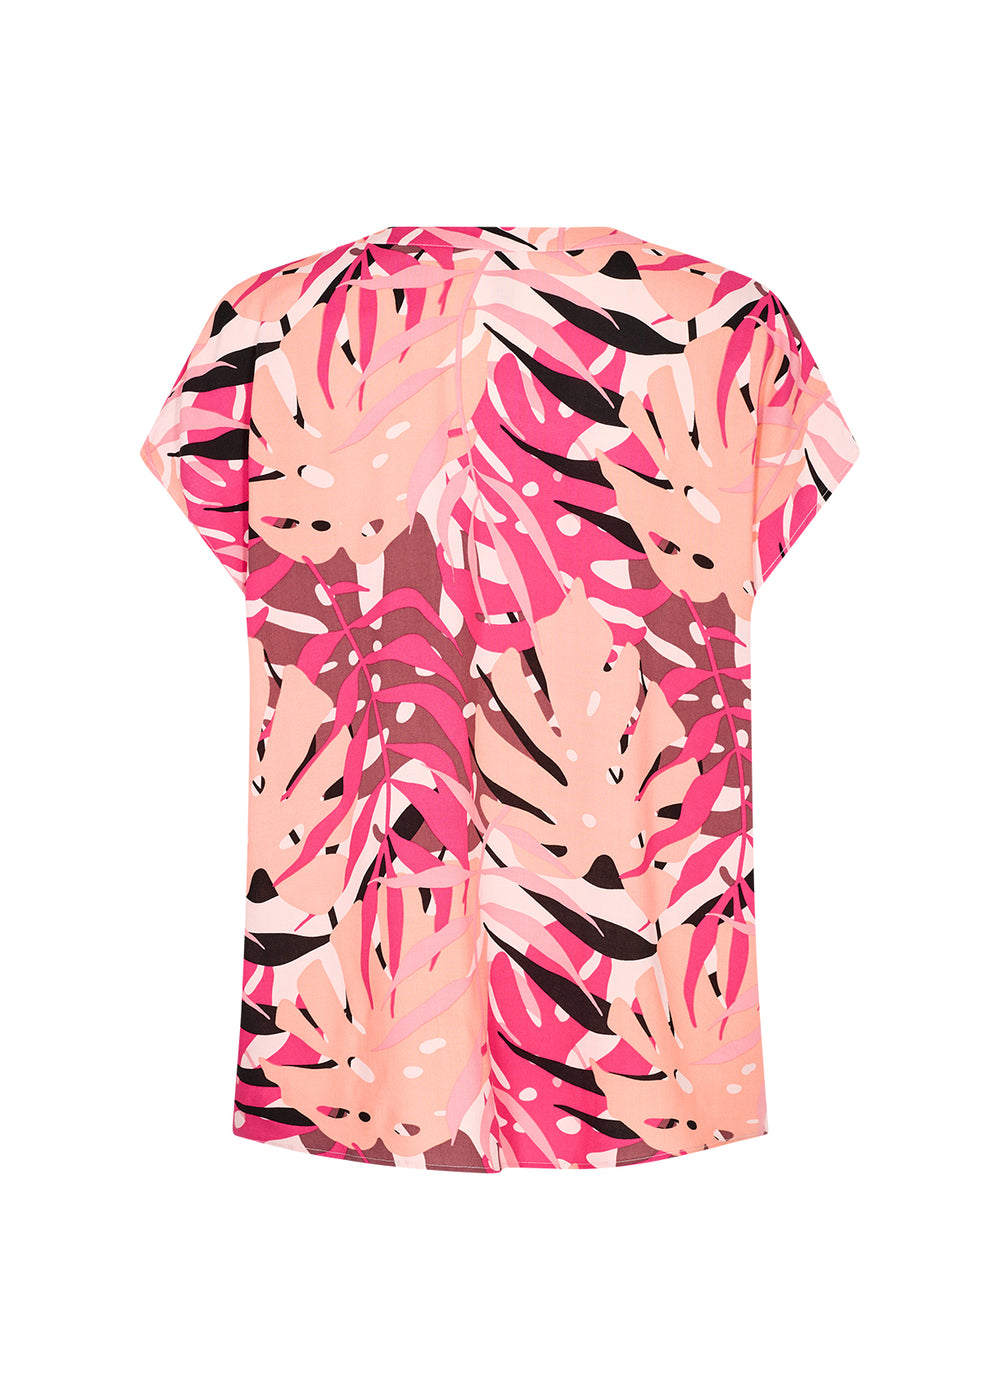 Soya Concept Kabrina 1 Pink Leaf Print Cap Sleeve Top Back View | Dotique